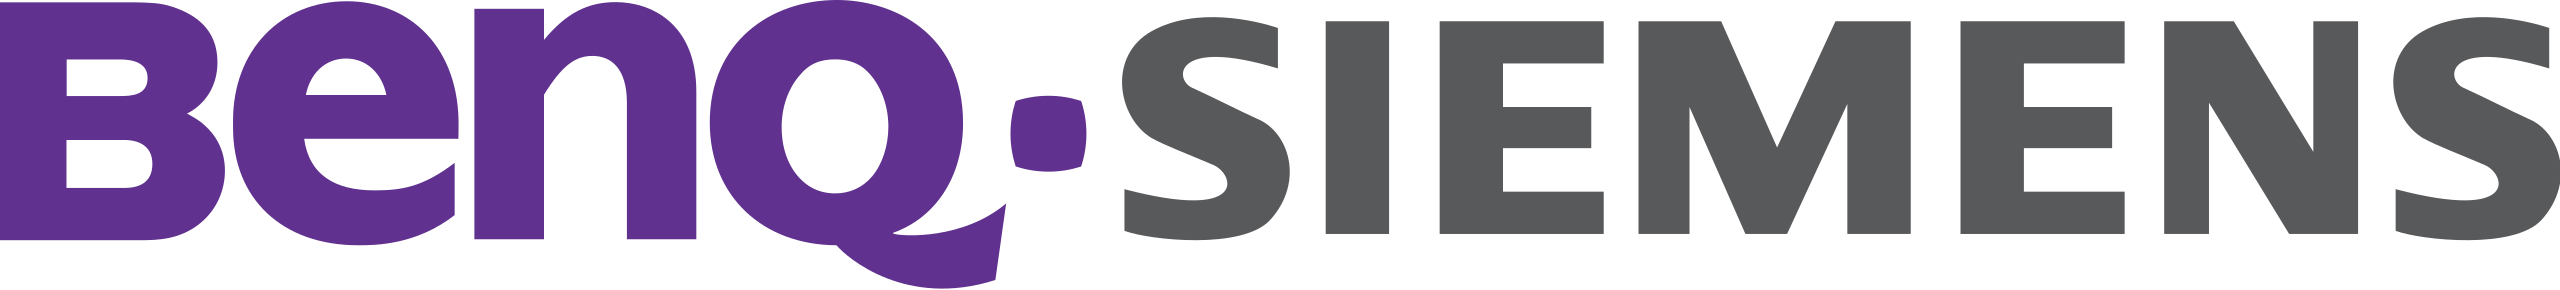 siemens logo vector